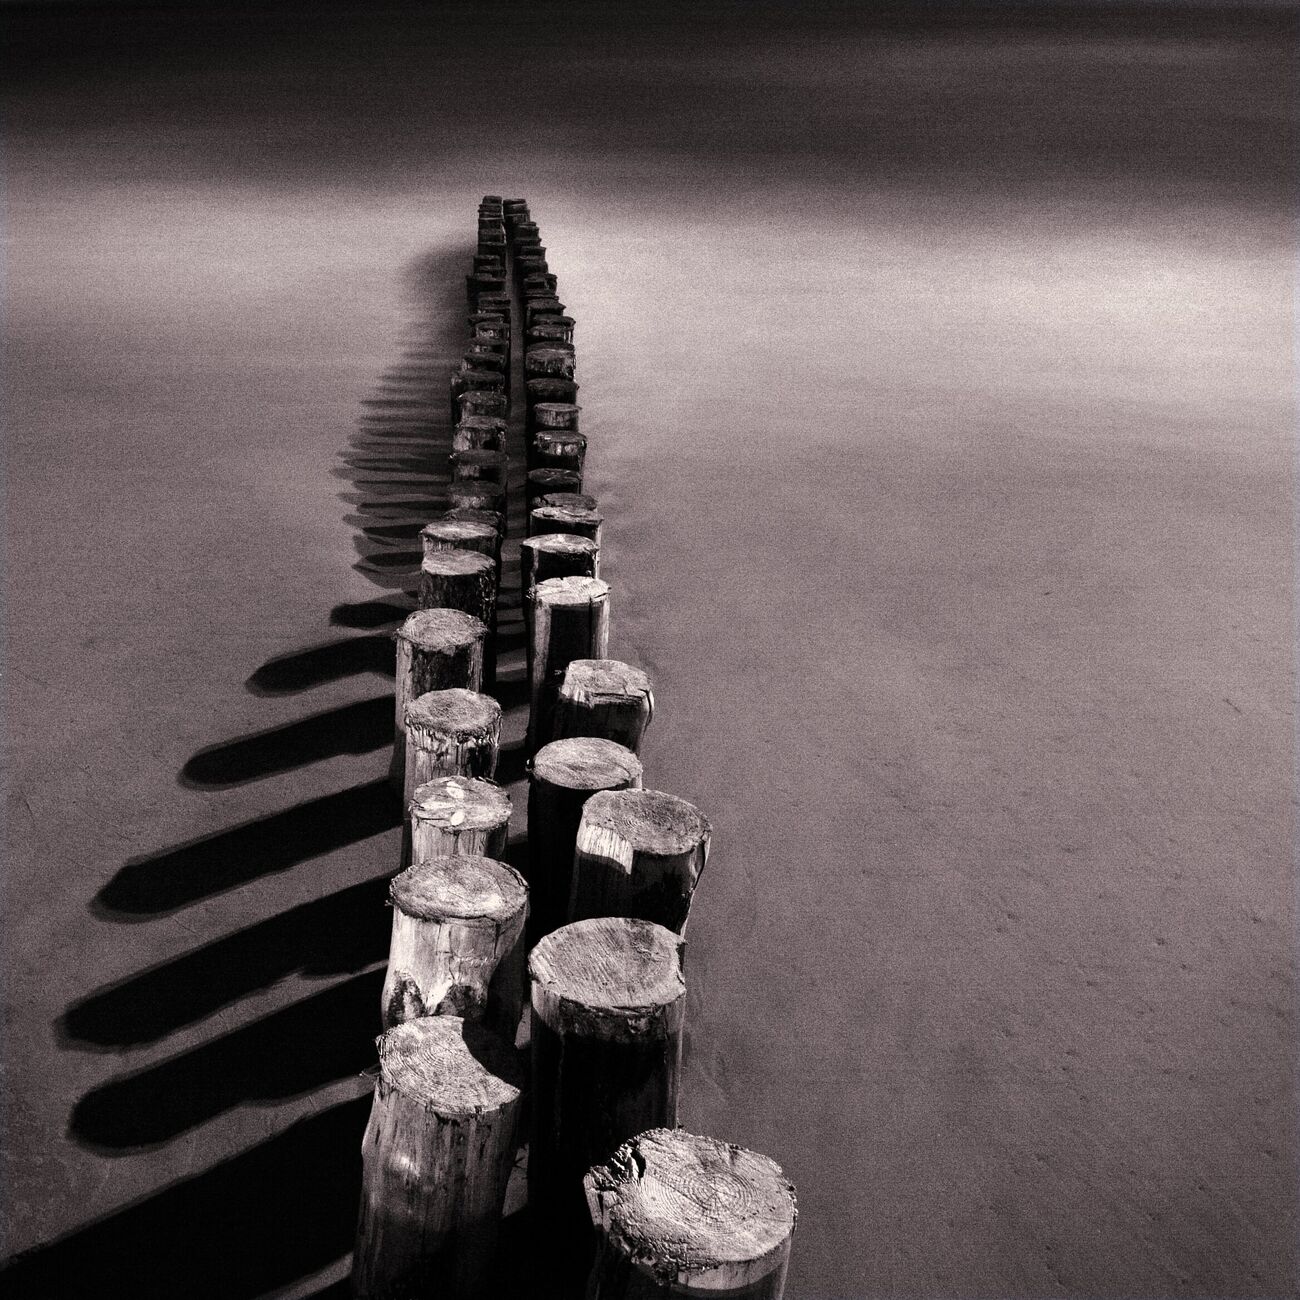 Moonlight Shadows, Cap Ferret, France. Juin 2005. Ref-680 - Denis Olivier Photographie